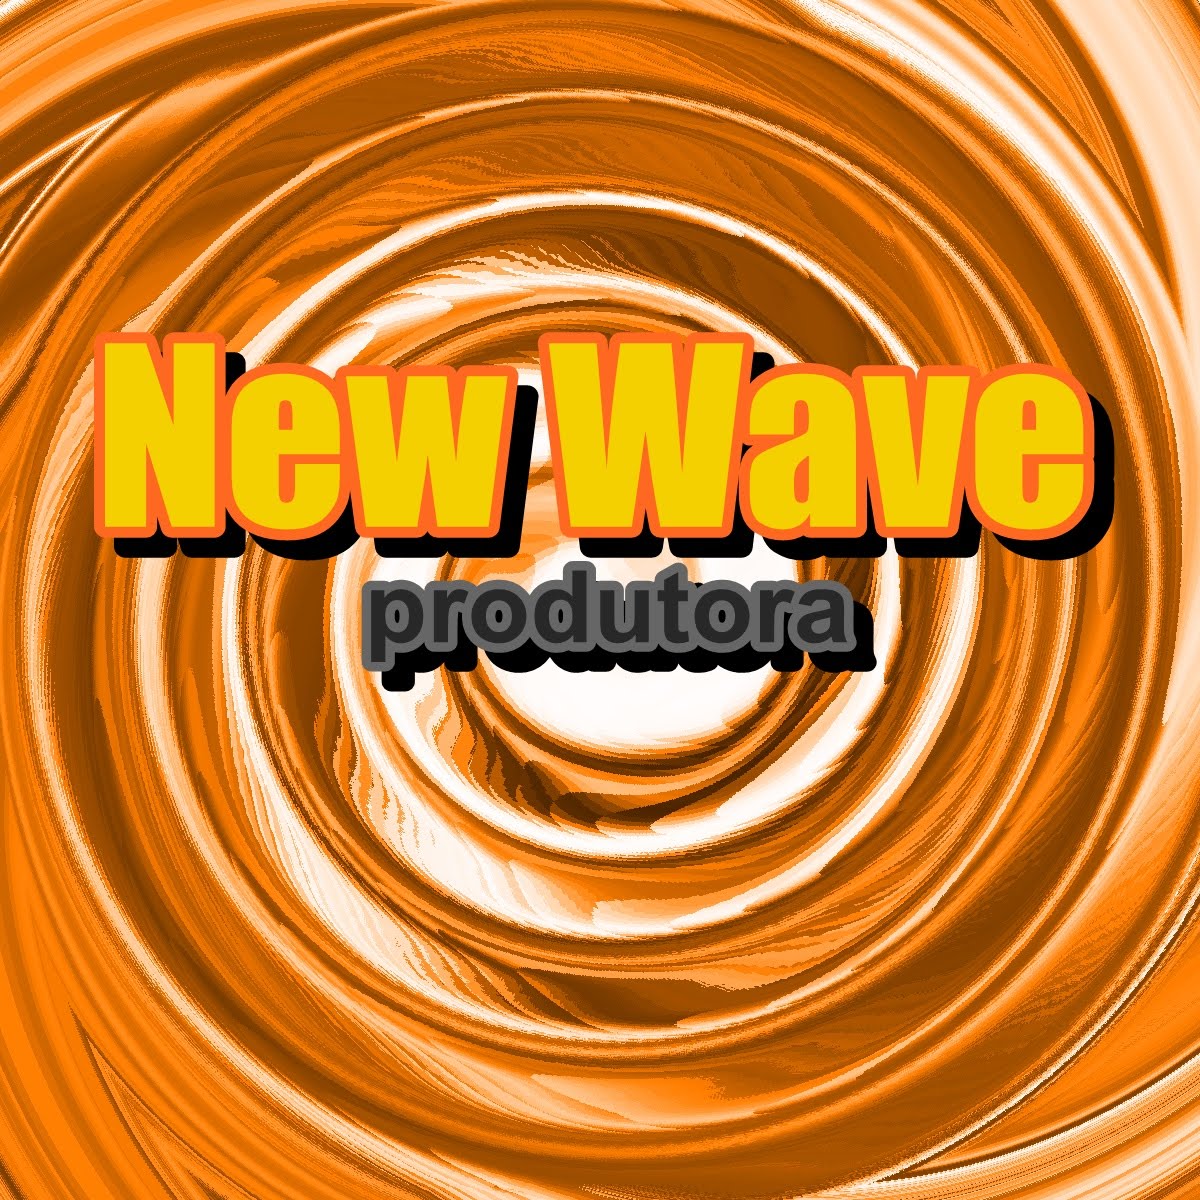 New Wave Produtora